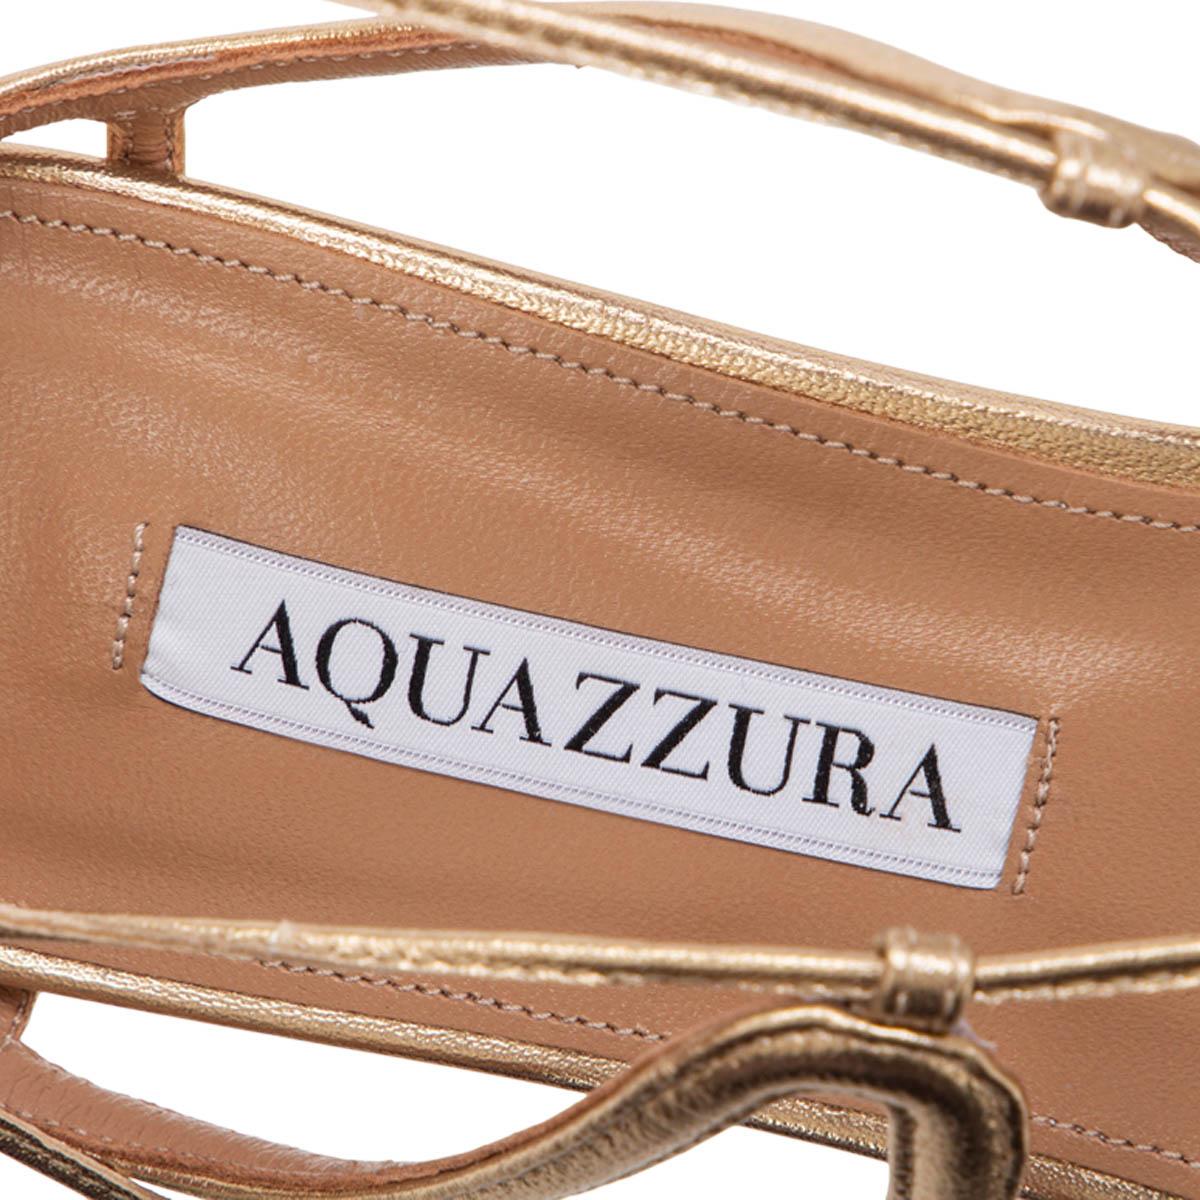 Gold AQUAZZURA metallic gold leather POMPEI Flat Gladiator Sandals Shoes 37.5